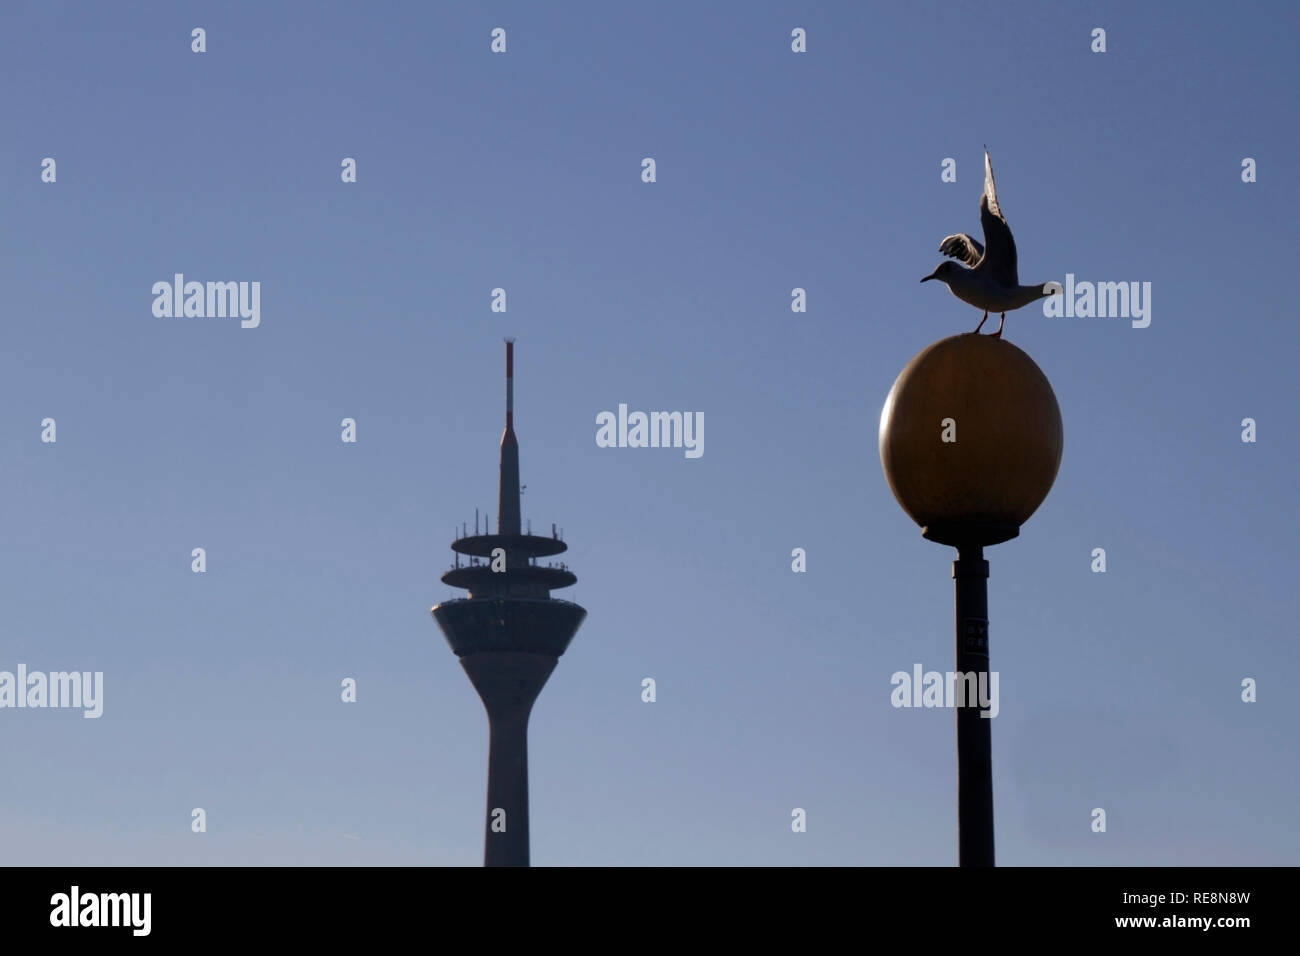 Doves posing against the blue sky with Düsseldorfs Rheinturm - Rheintower - in the background Stock Photo